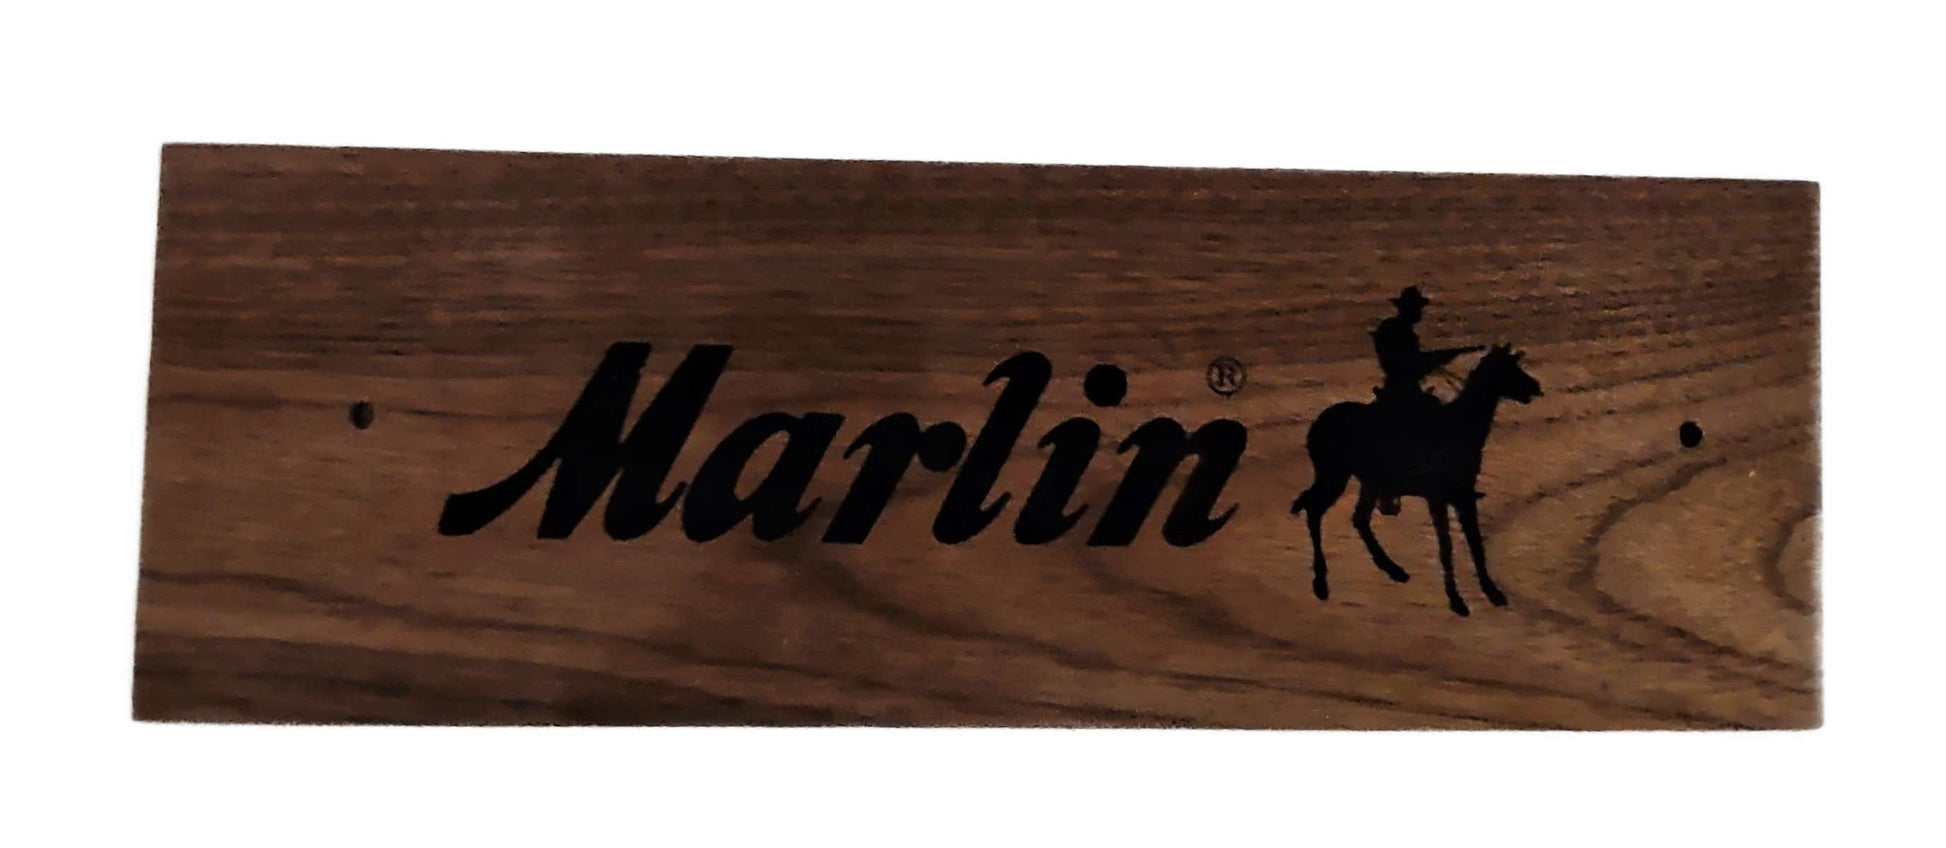 Walker Wood Gifts Novelties Rustic Walnut Marlin Gun Plaque, Laser Burned, Ranch Cowboy Decor Gift